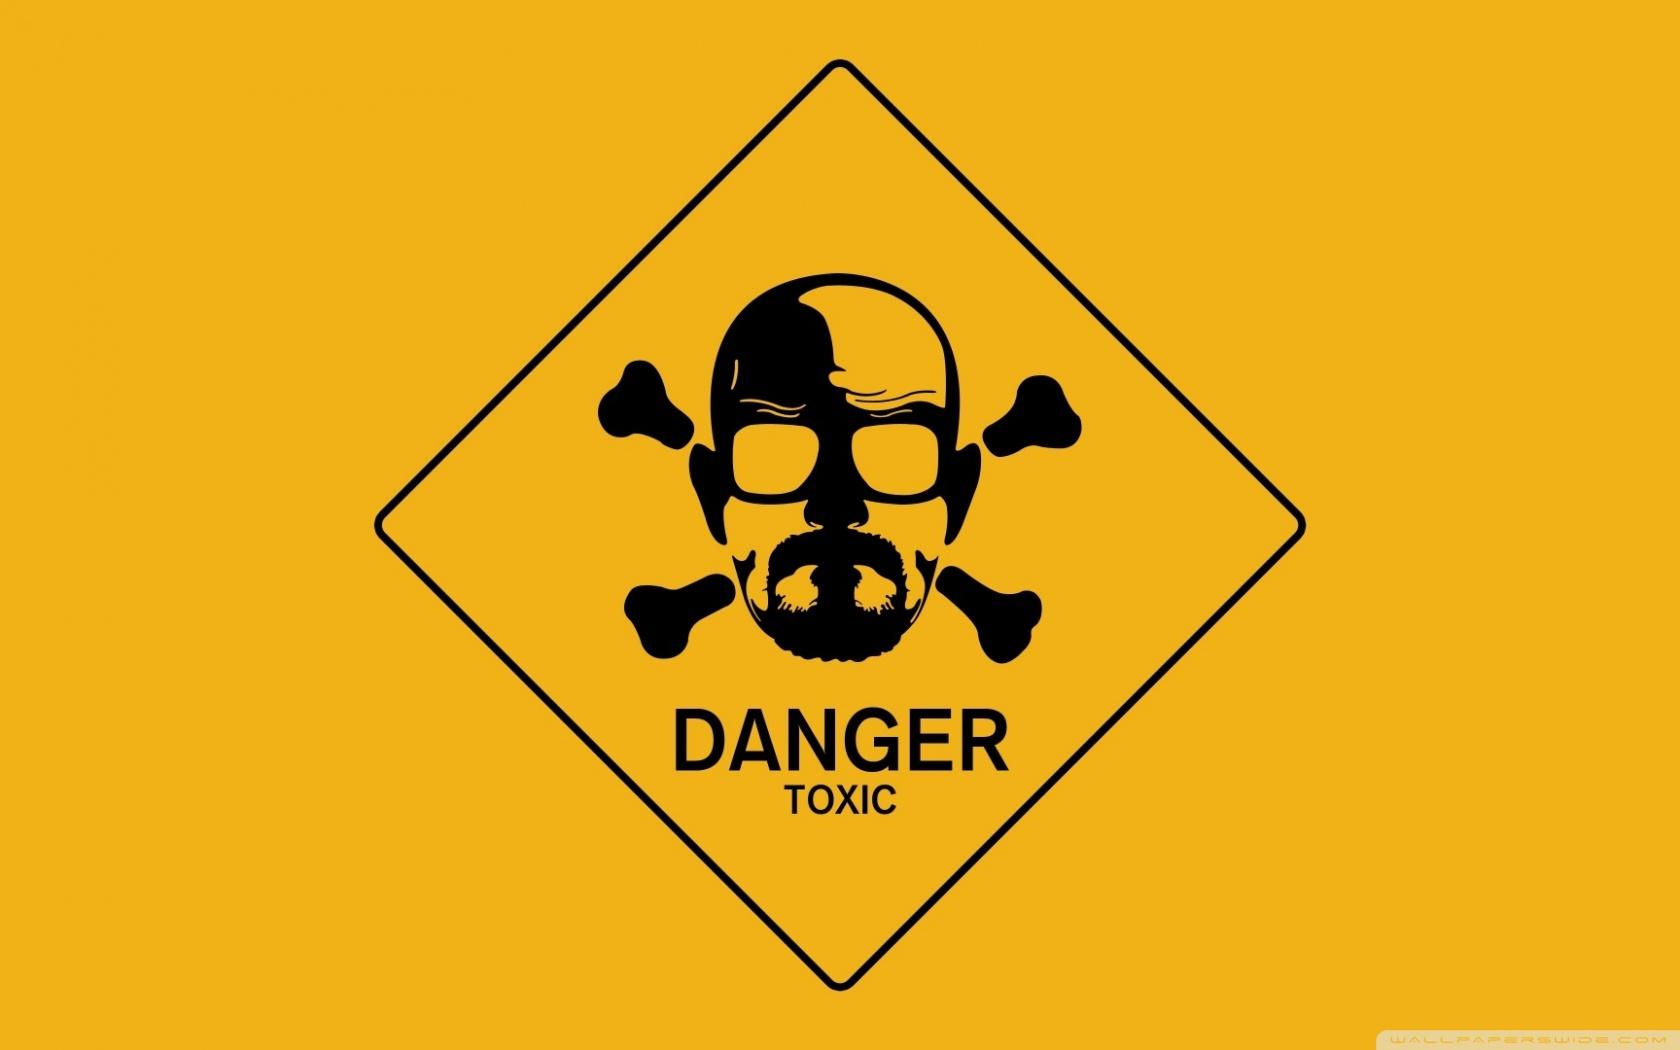 Breaking Bad Walt Danger Toxic Sign Ultra HD Desktop Background Wallpaper for 4K UHD TV, Widescreen & UltraWide Desktop & Laptop, Tablet